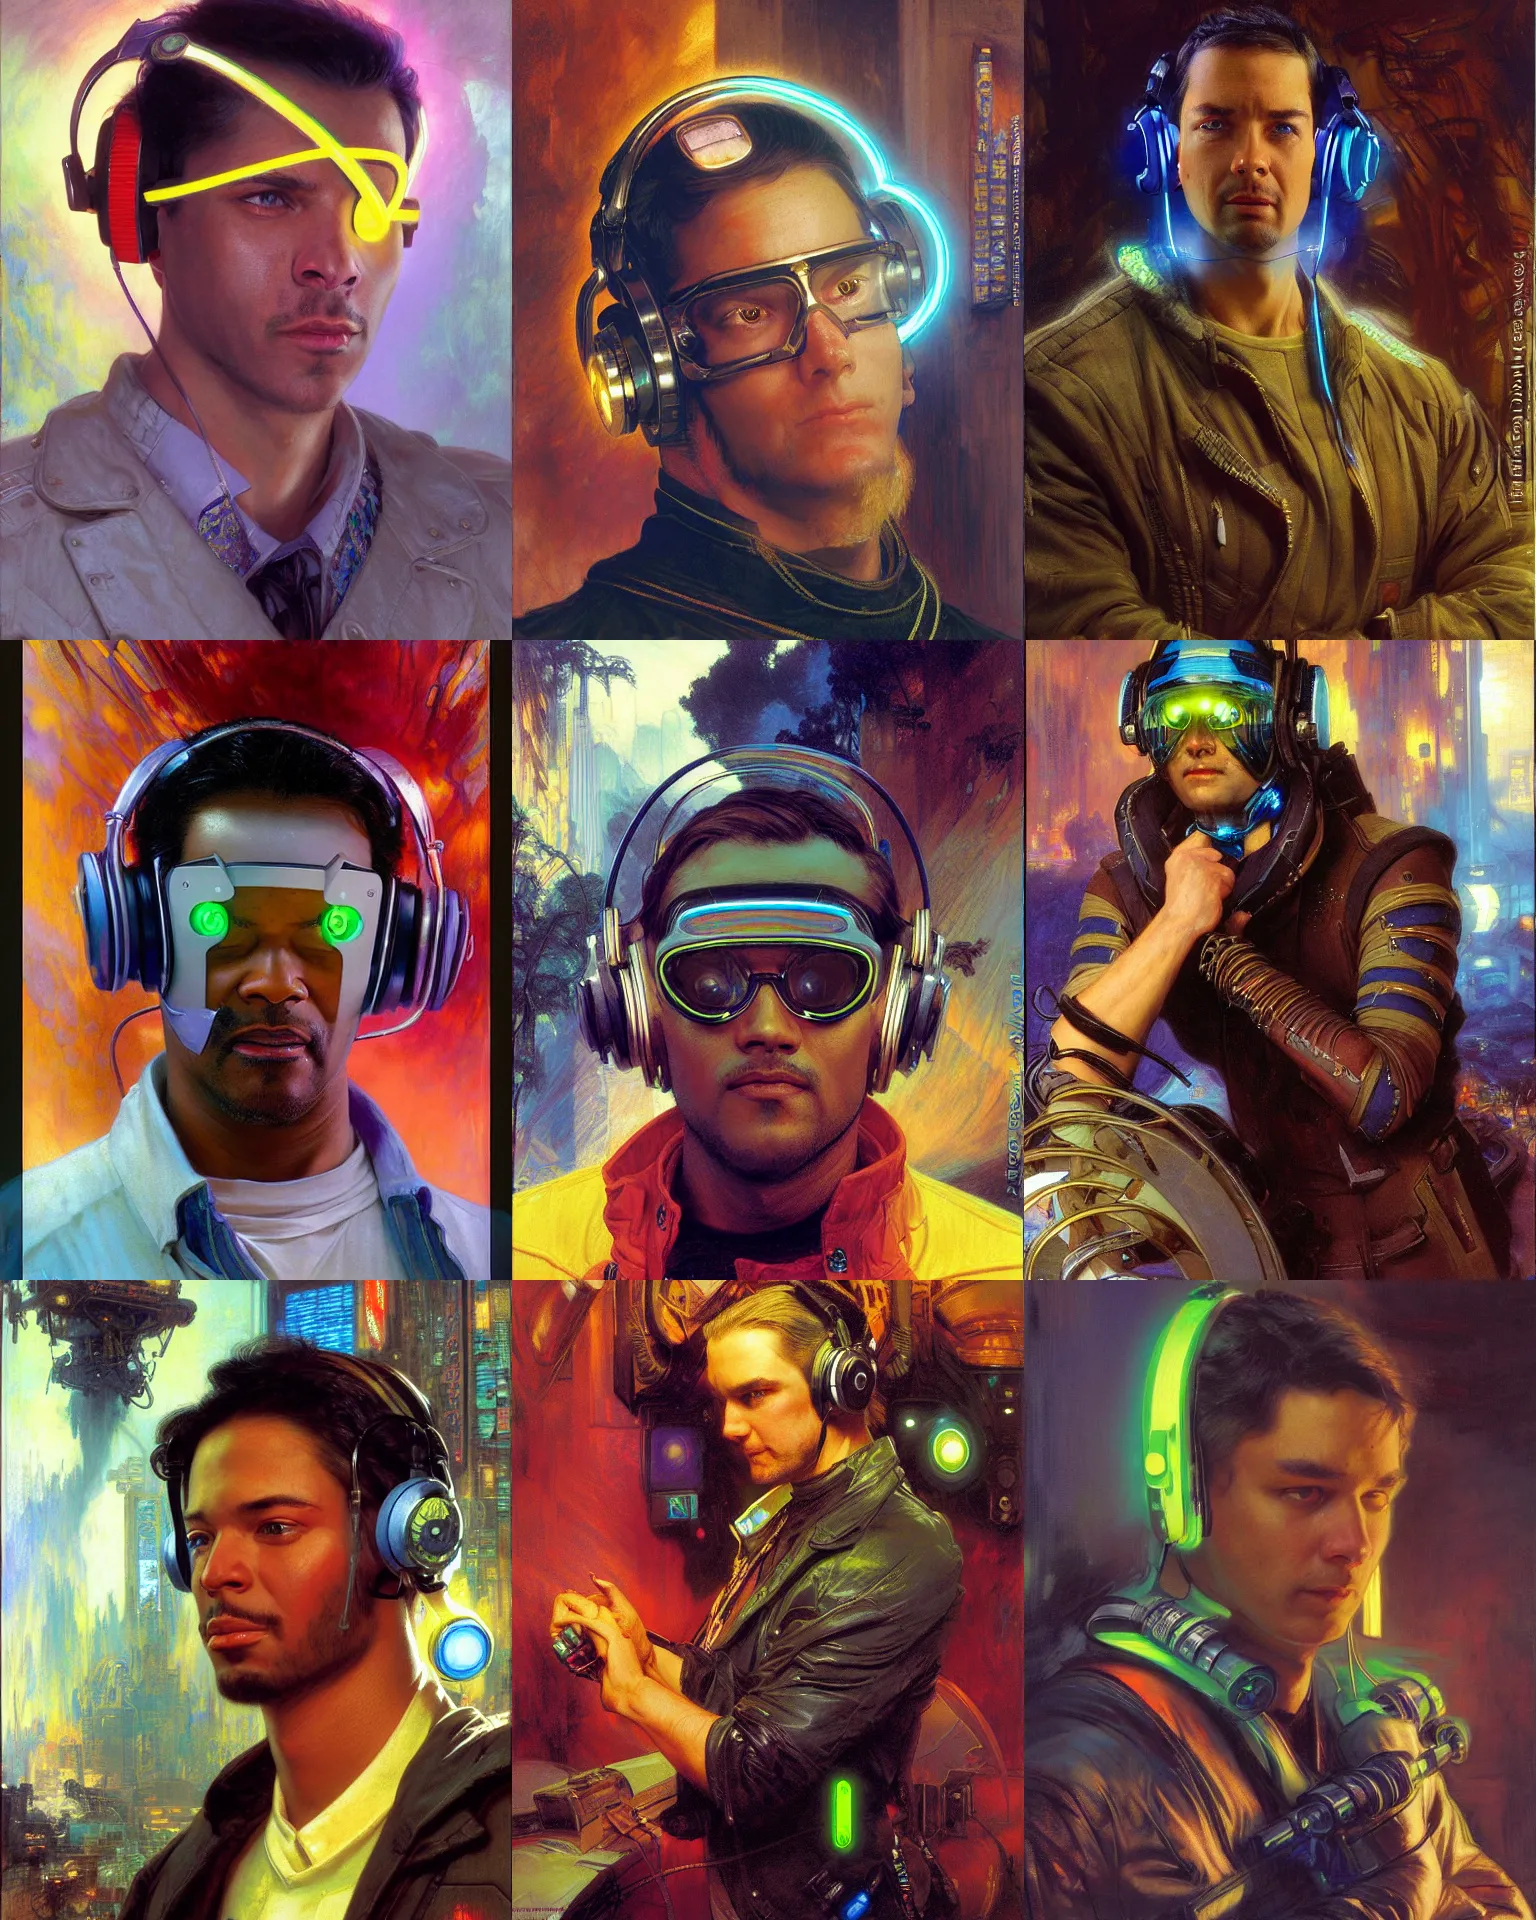 Prompt: digital neon cyberpunk male with geordi eye visor and headphones portrait painting by donato giancola, thomas moran, john berkey, j. c. leyendecker, alphonse mucha